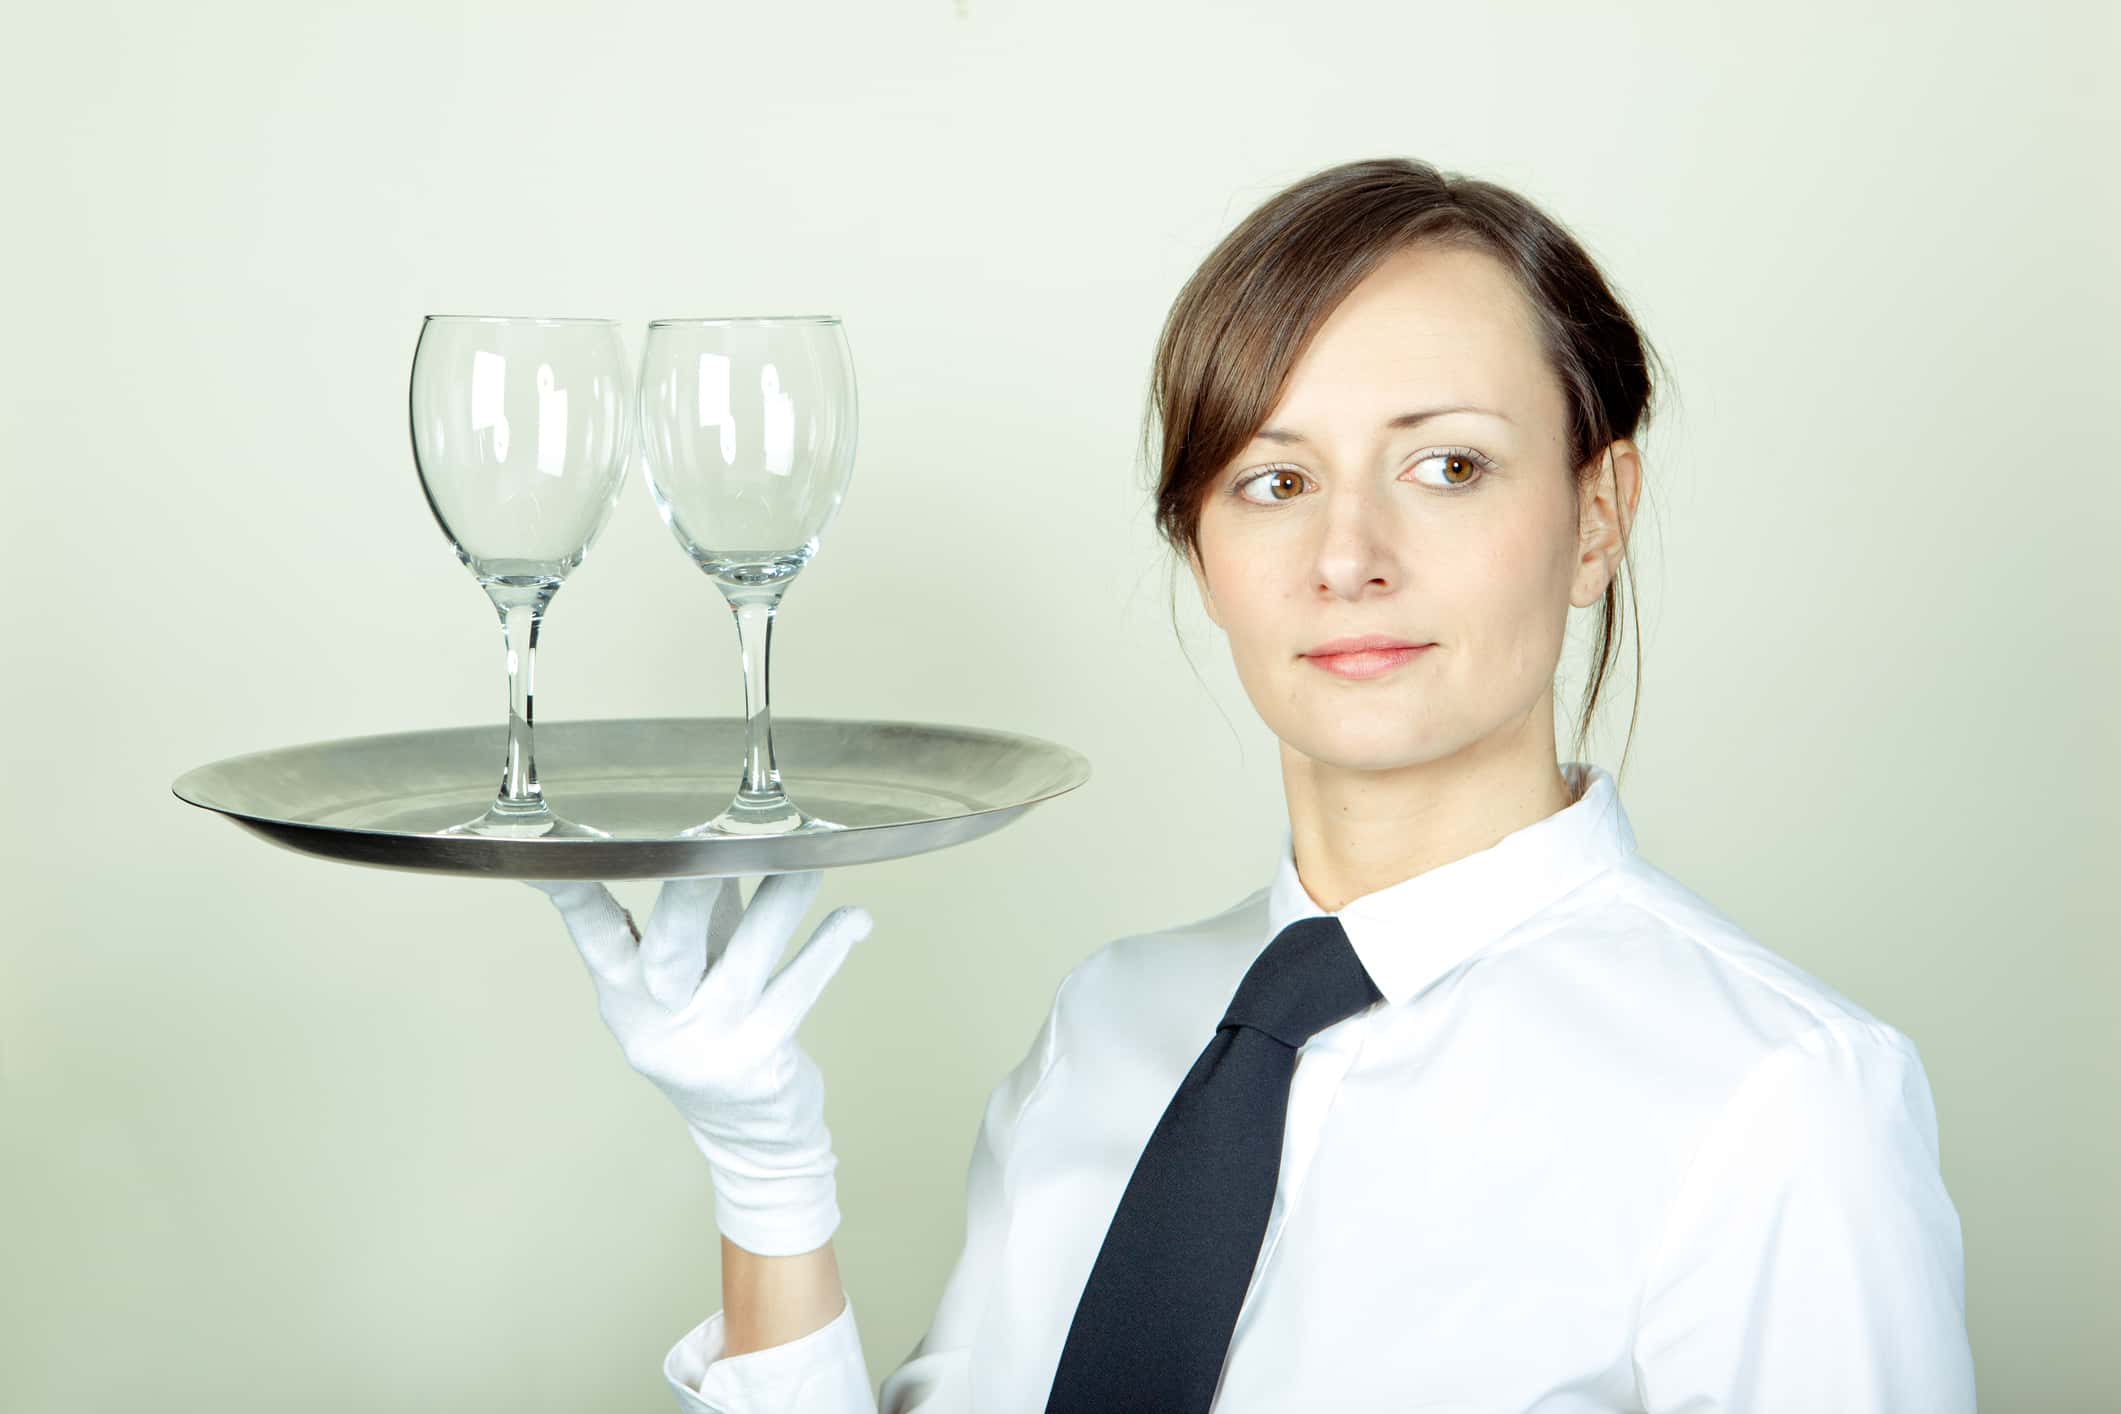 Silver service waitress